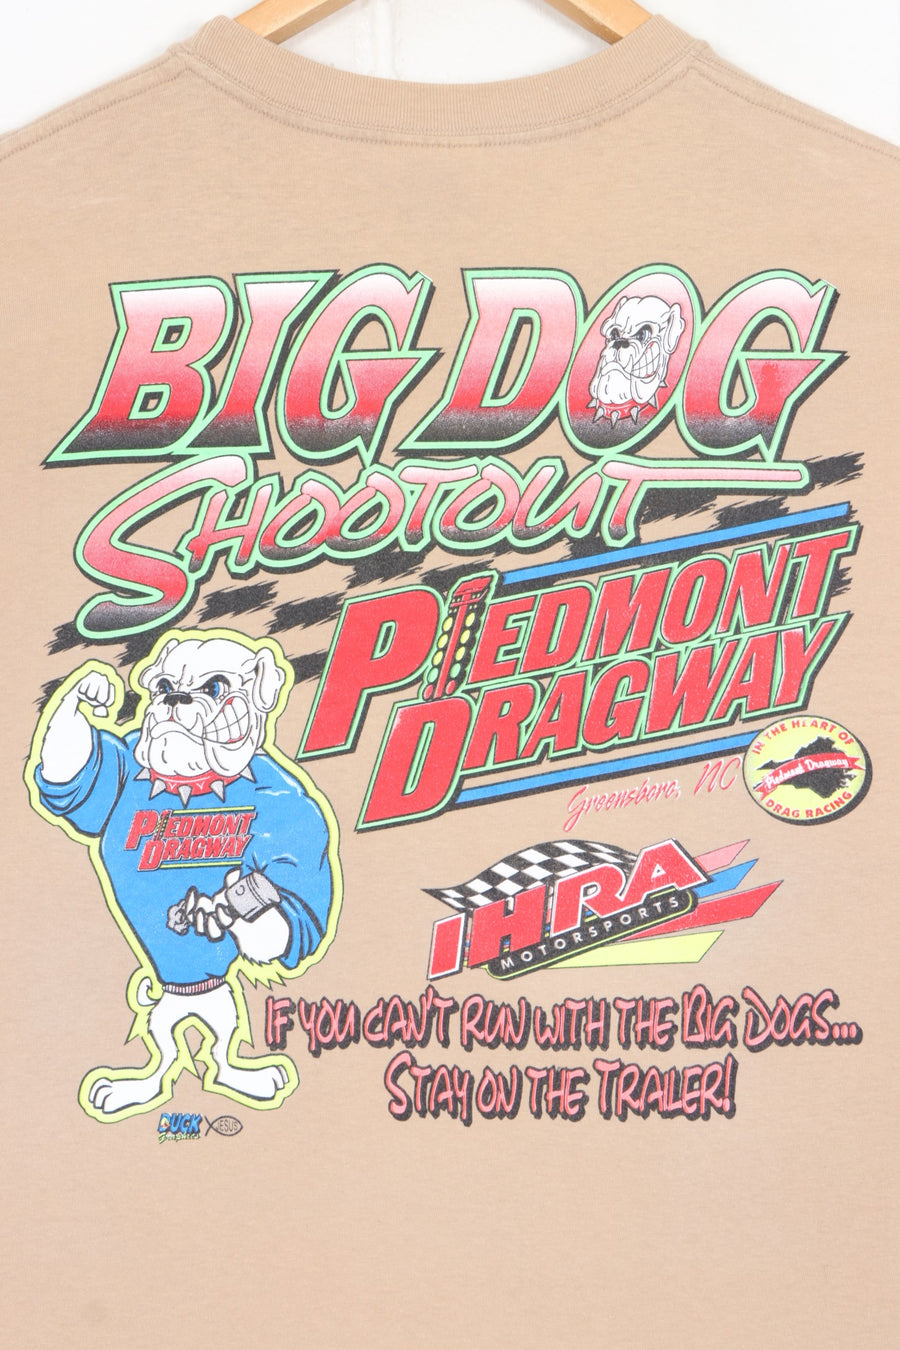 Piedmont Big Dog Shootout Dragway Racing Front Back T-Shirt (L)